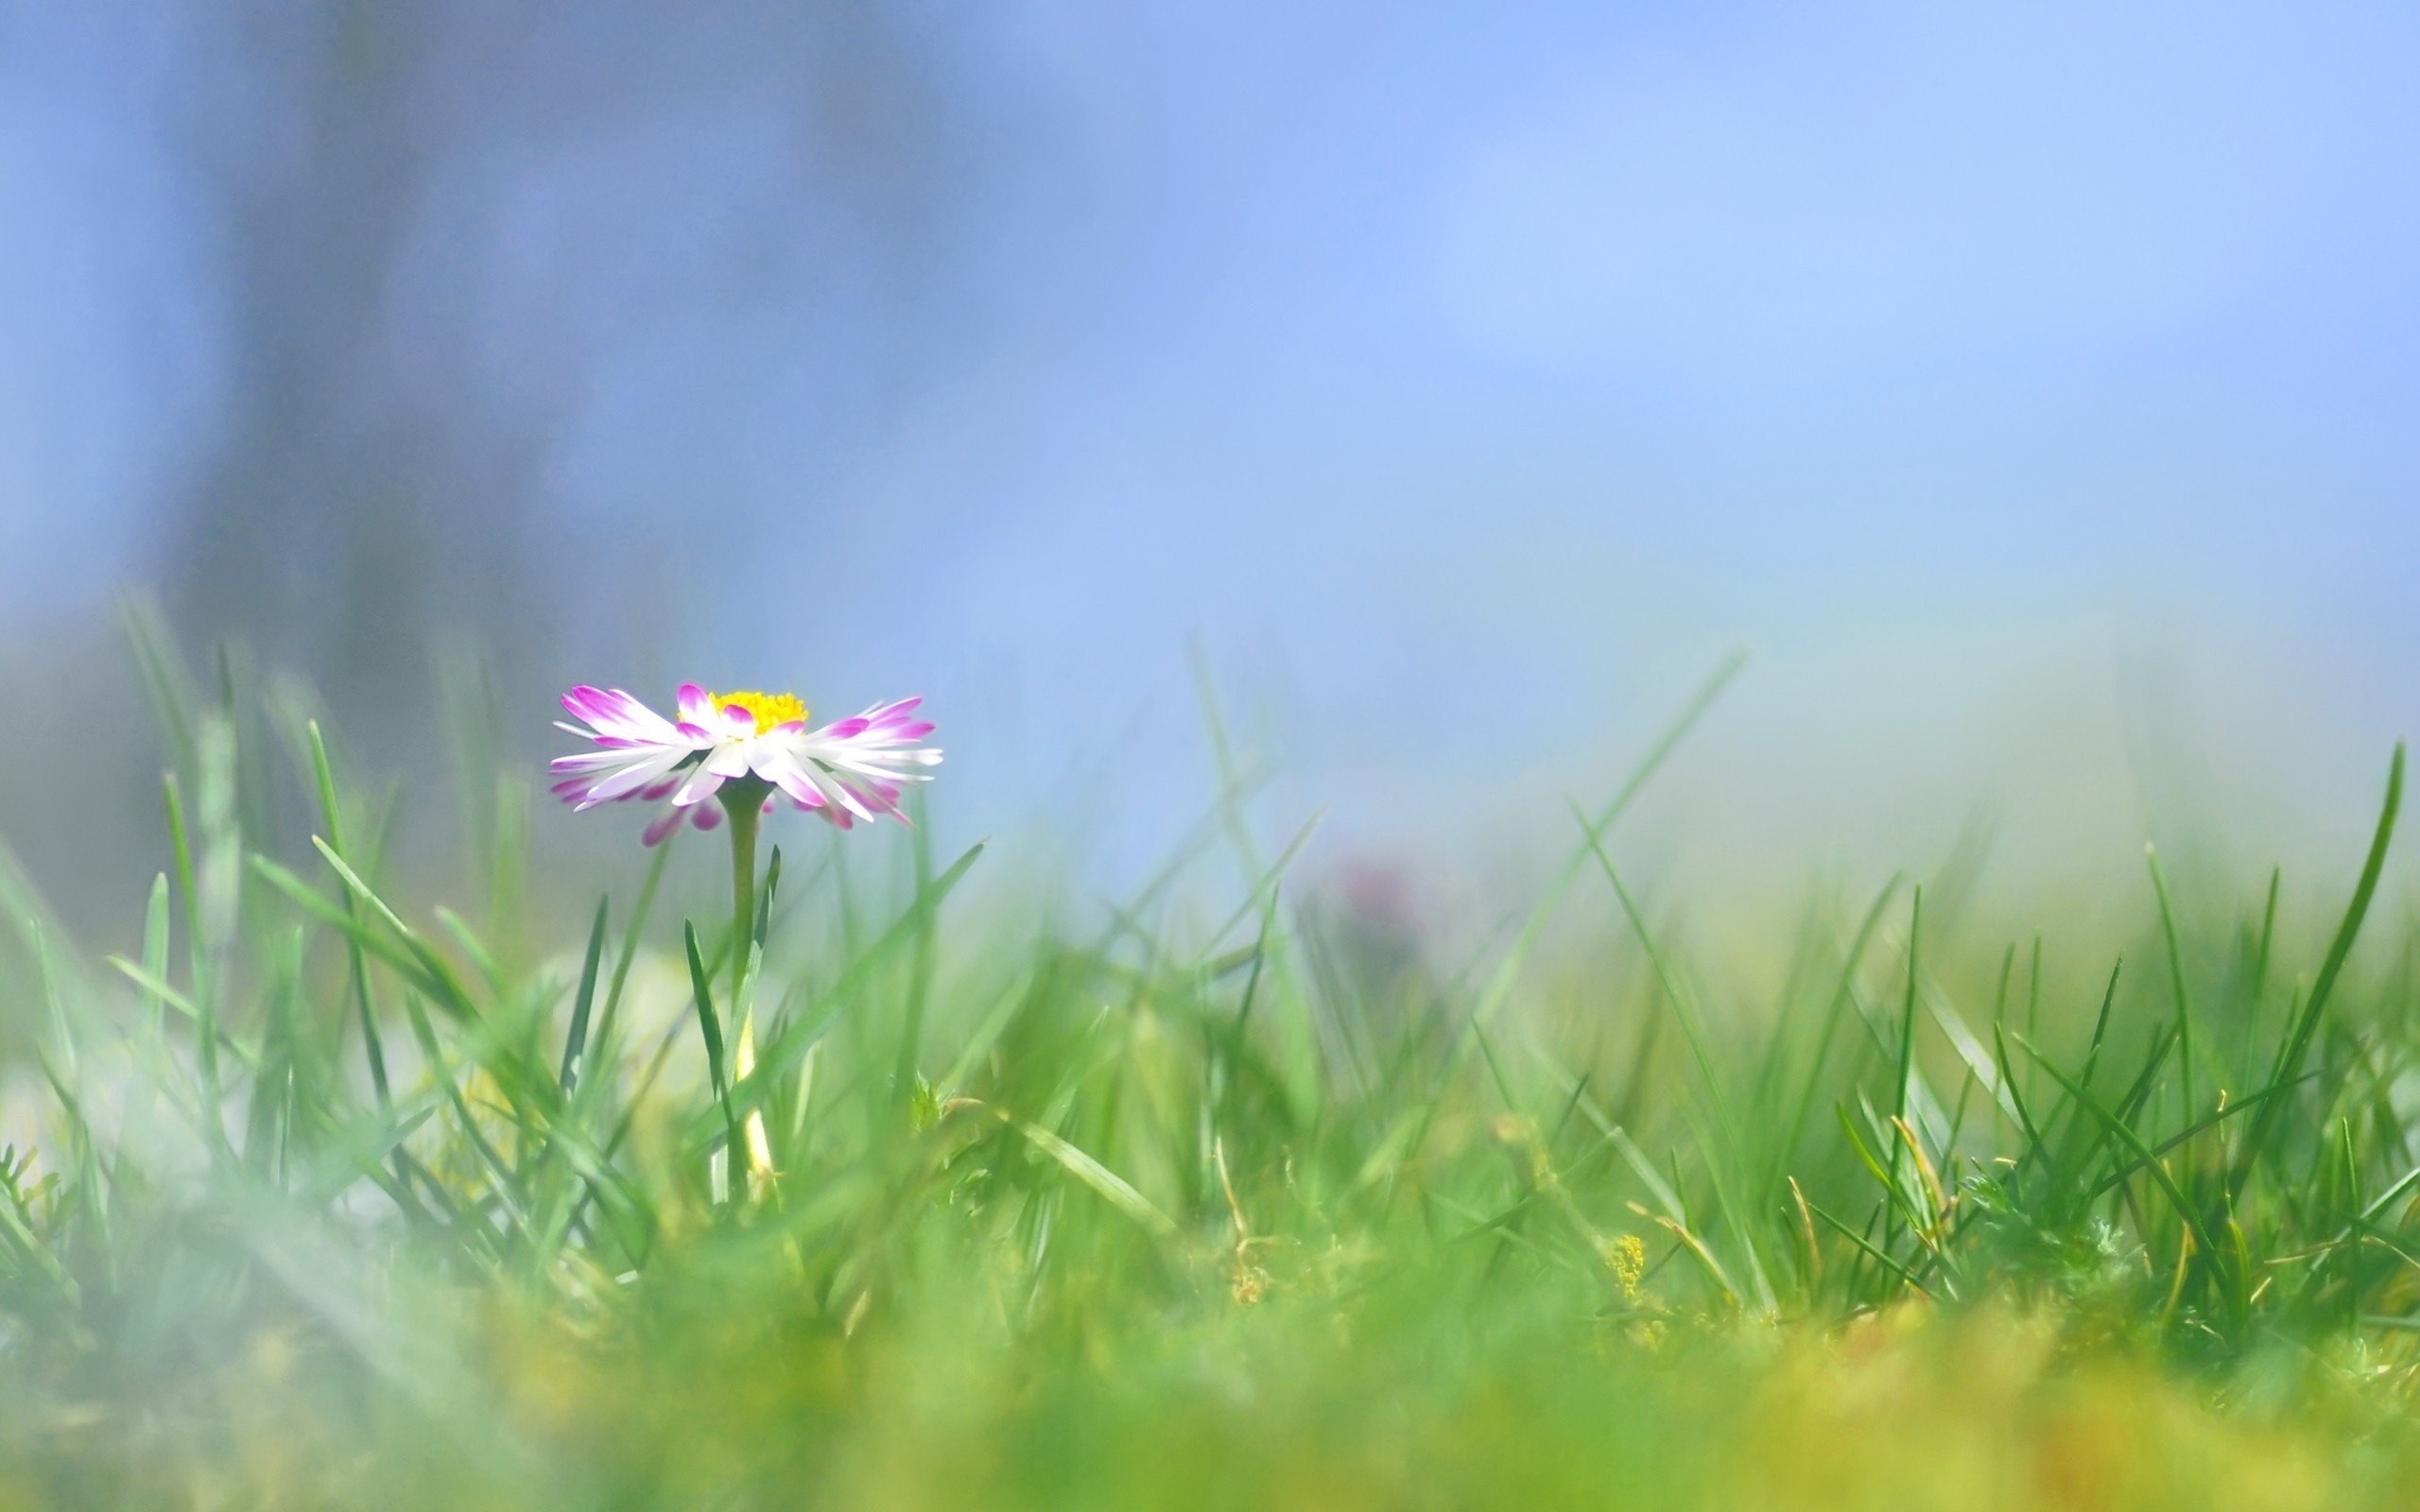 одинокий цветок в траве обои